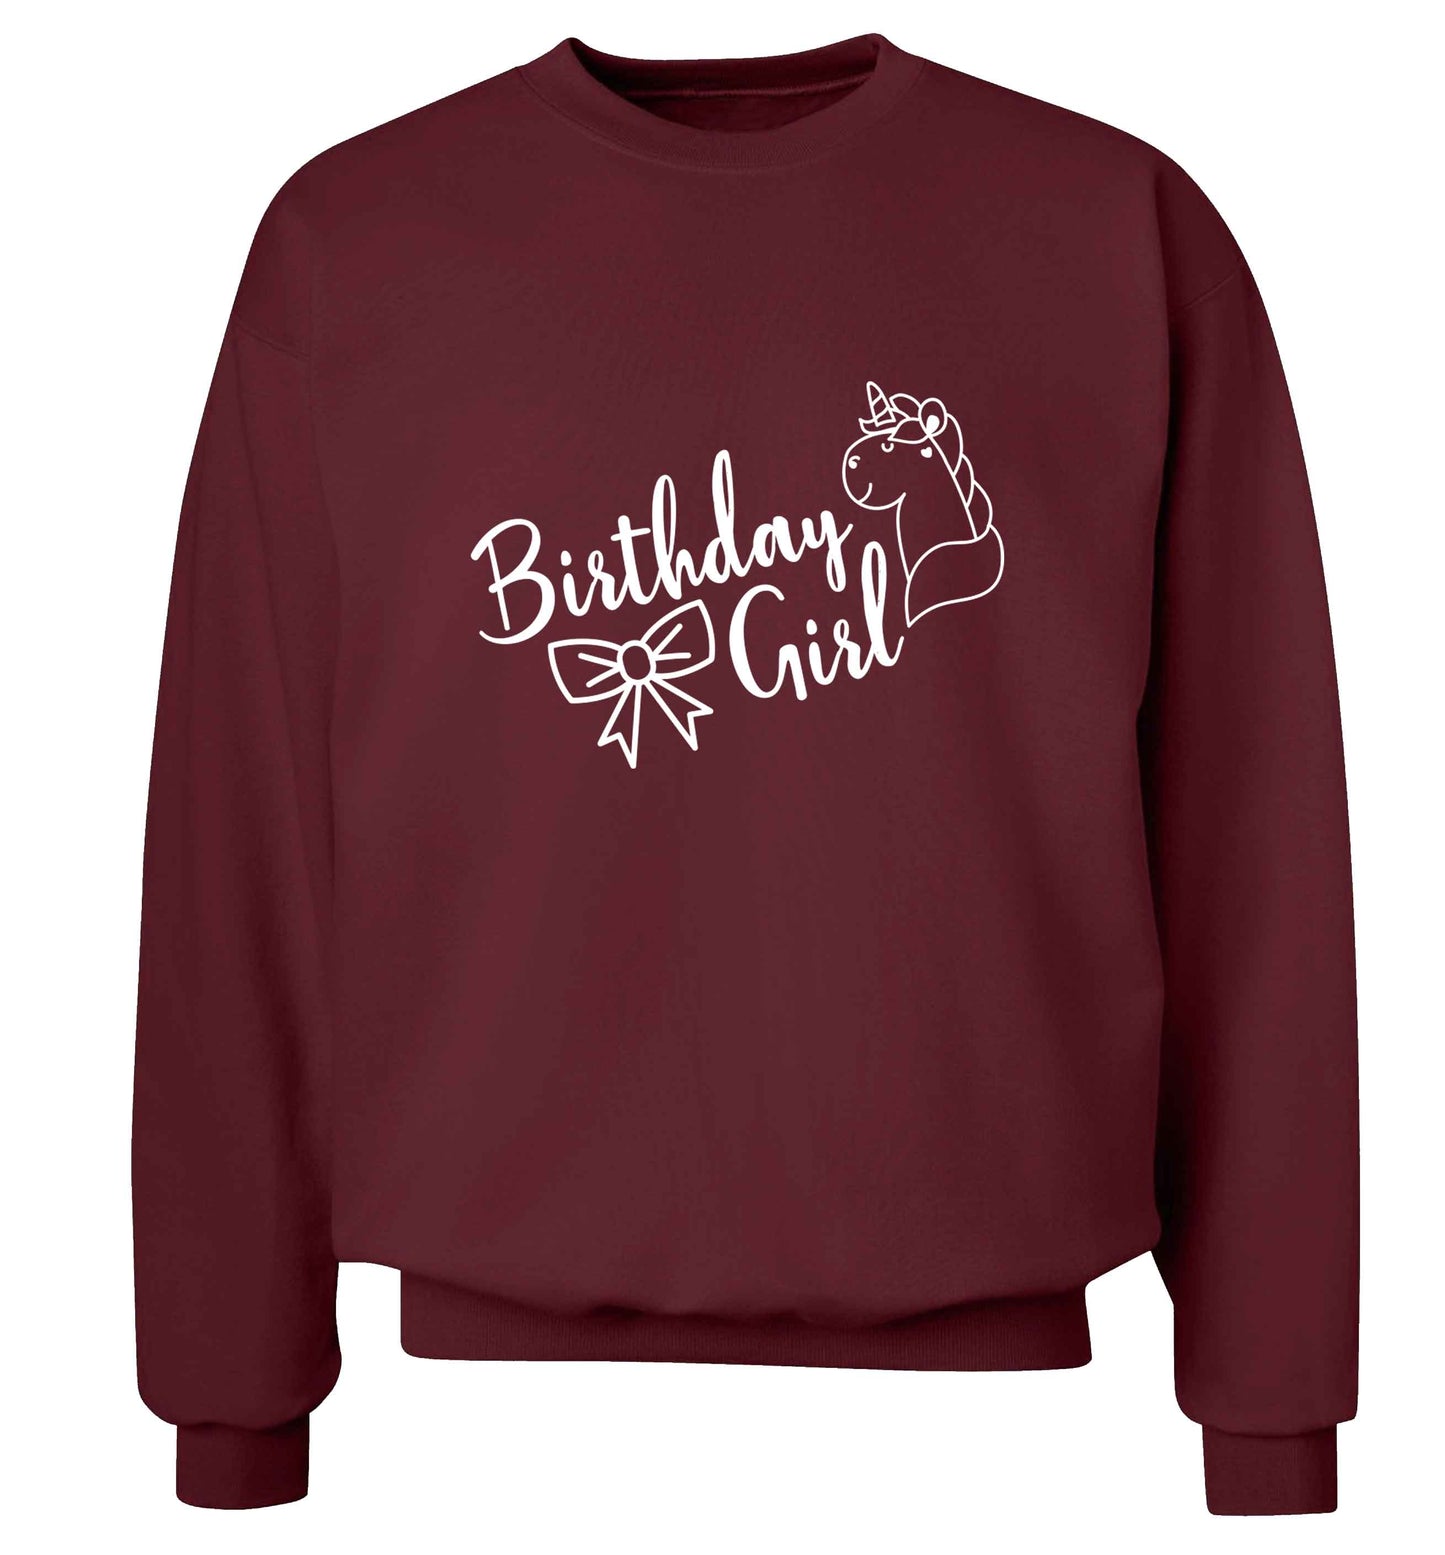 Birthday girl adult's unisex maroon sweater 2XL